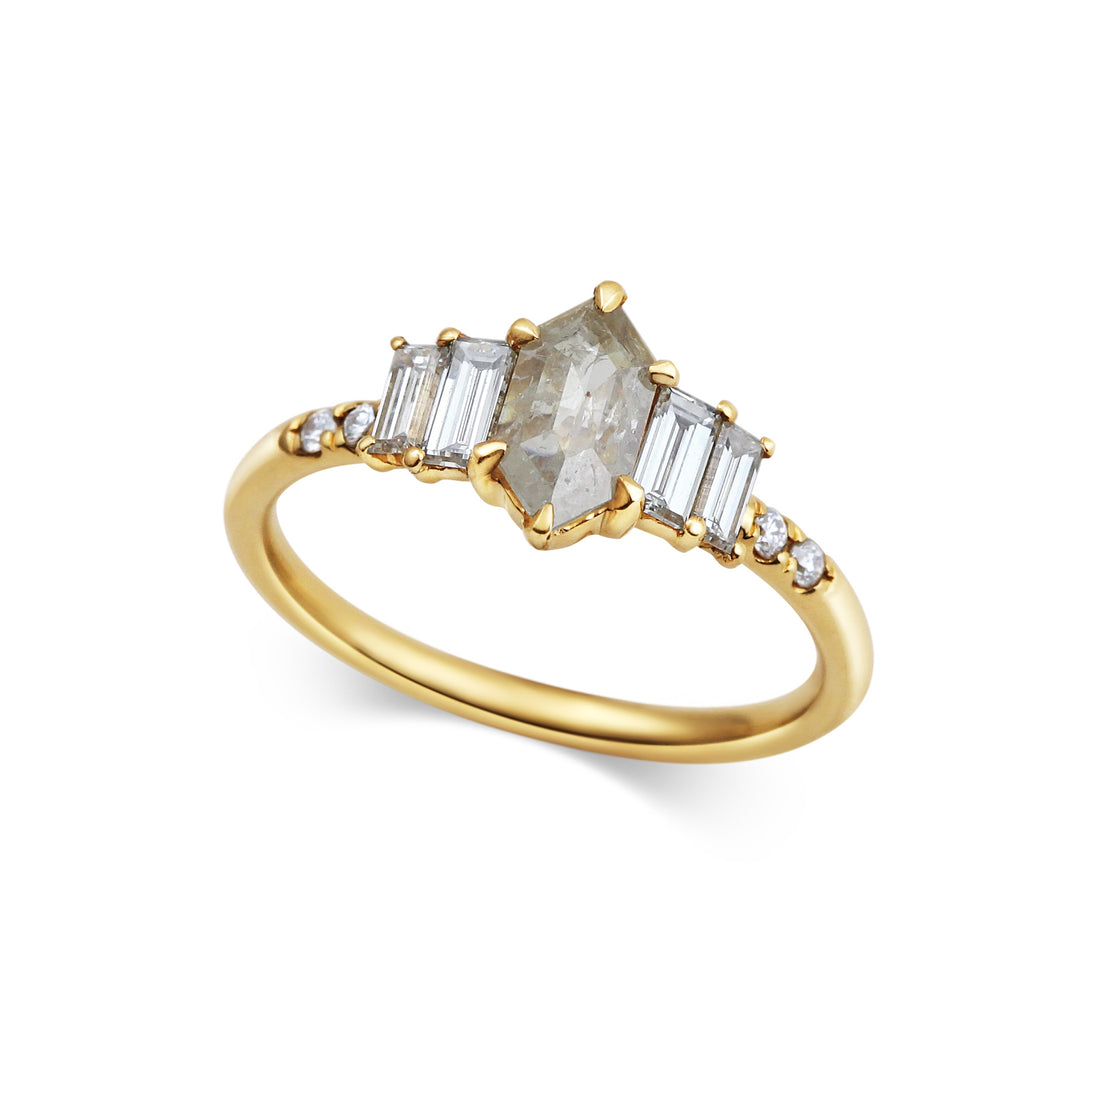  Art Deco Hexagonal Diamond Ring by Michelle Oh | The Cut London